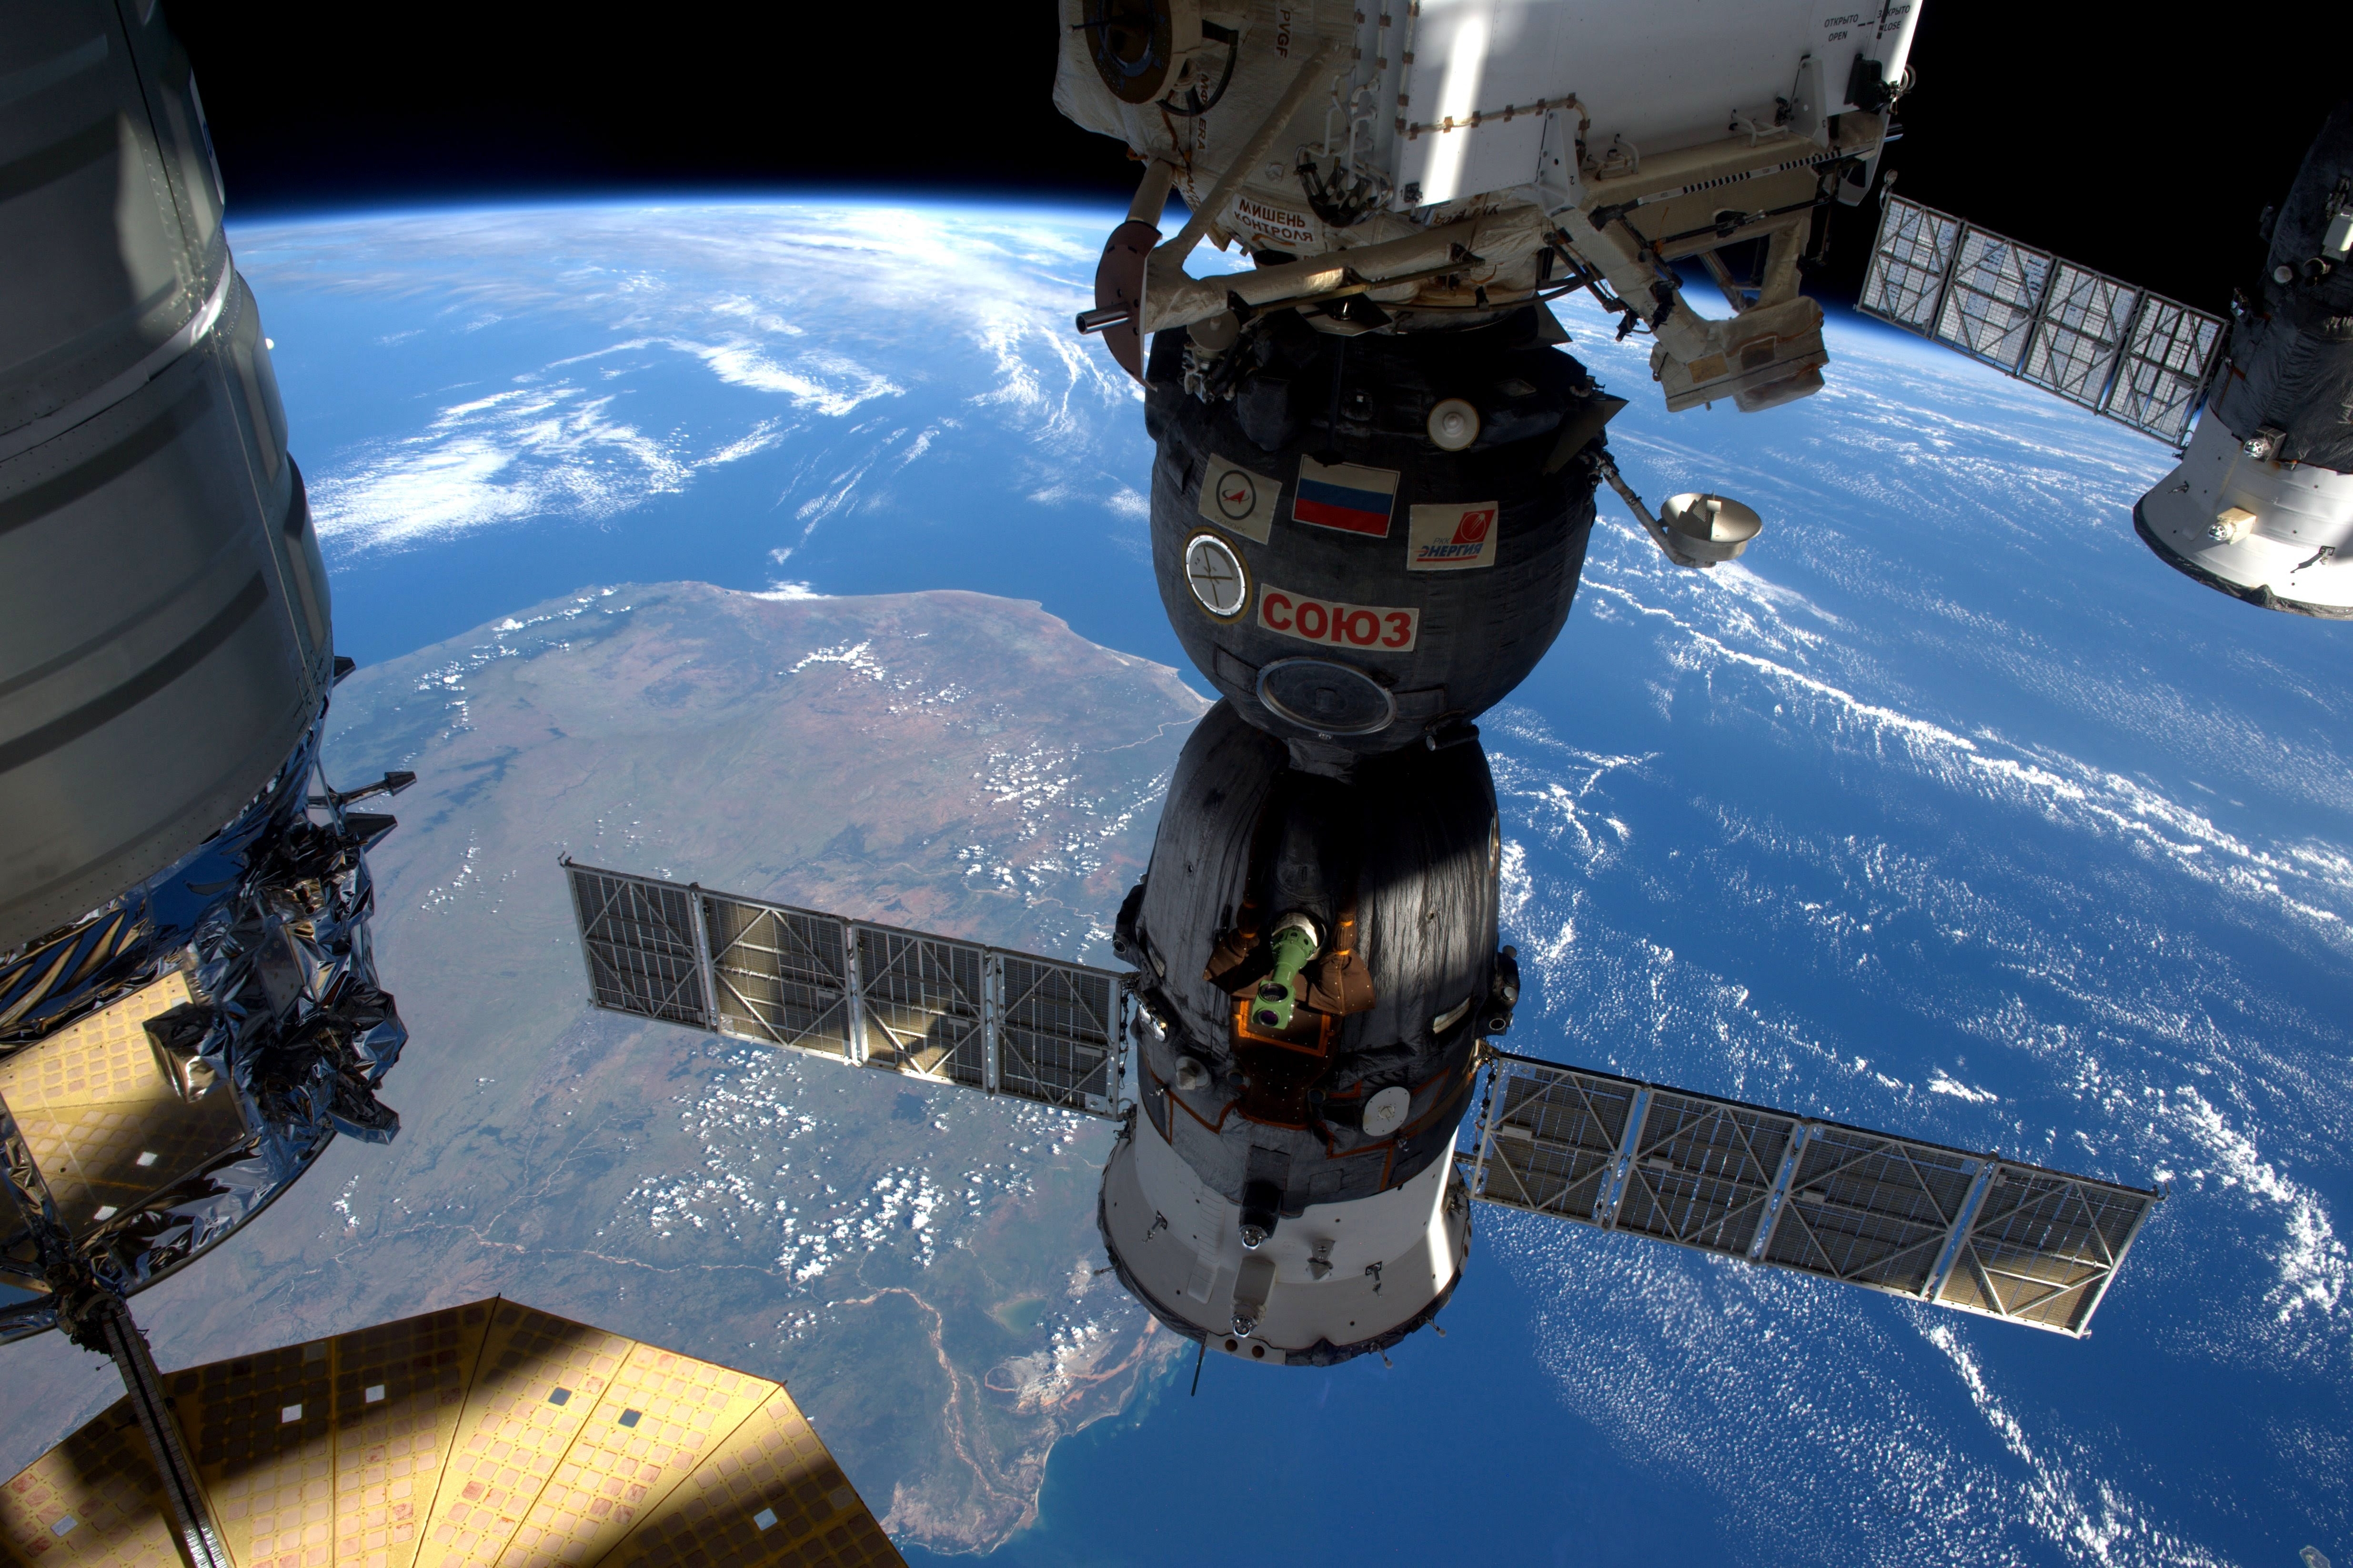 Space station marks milestone 100,000th orbit of Earth CBS News